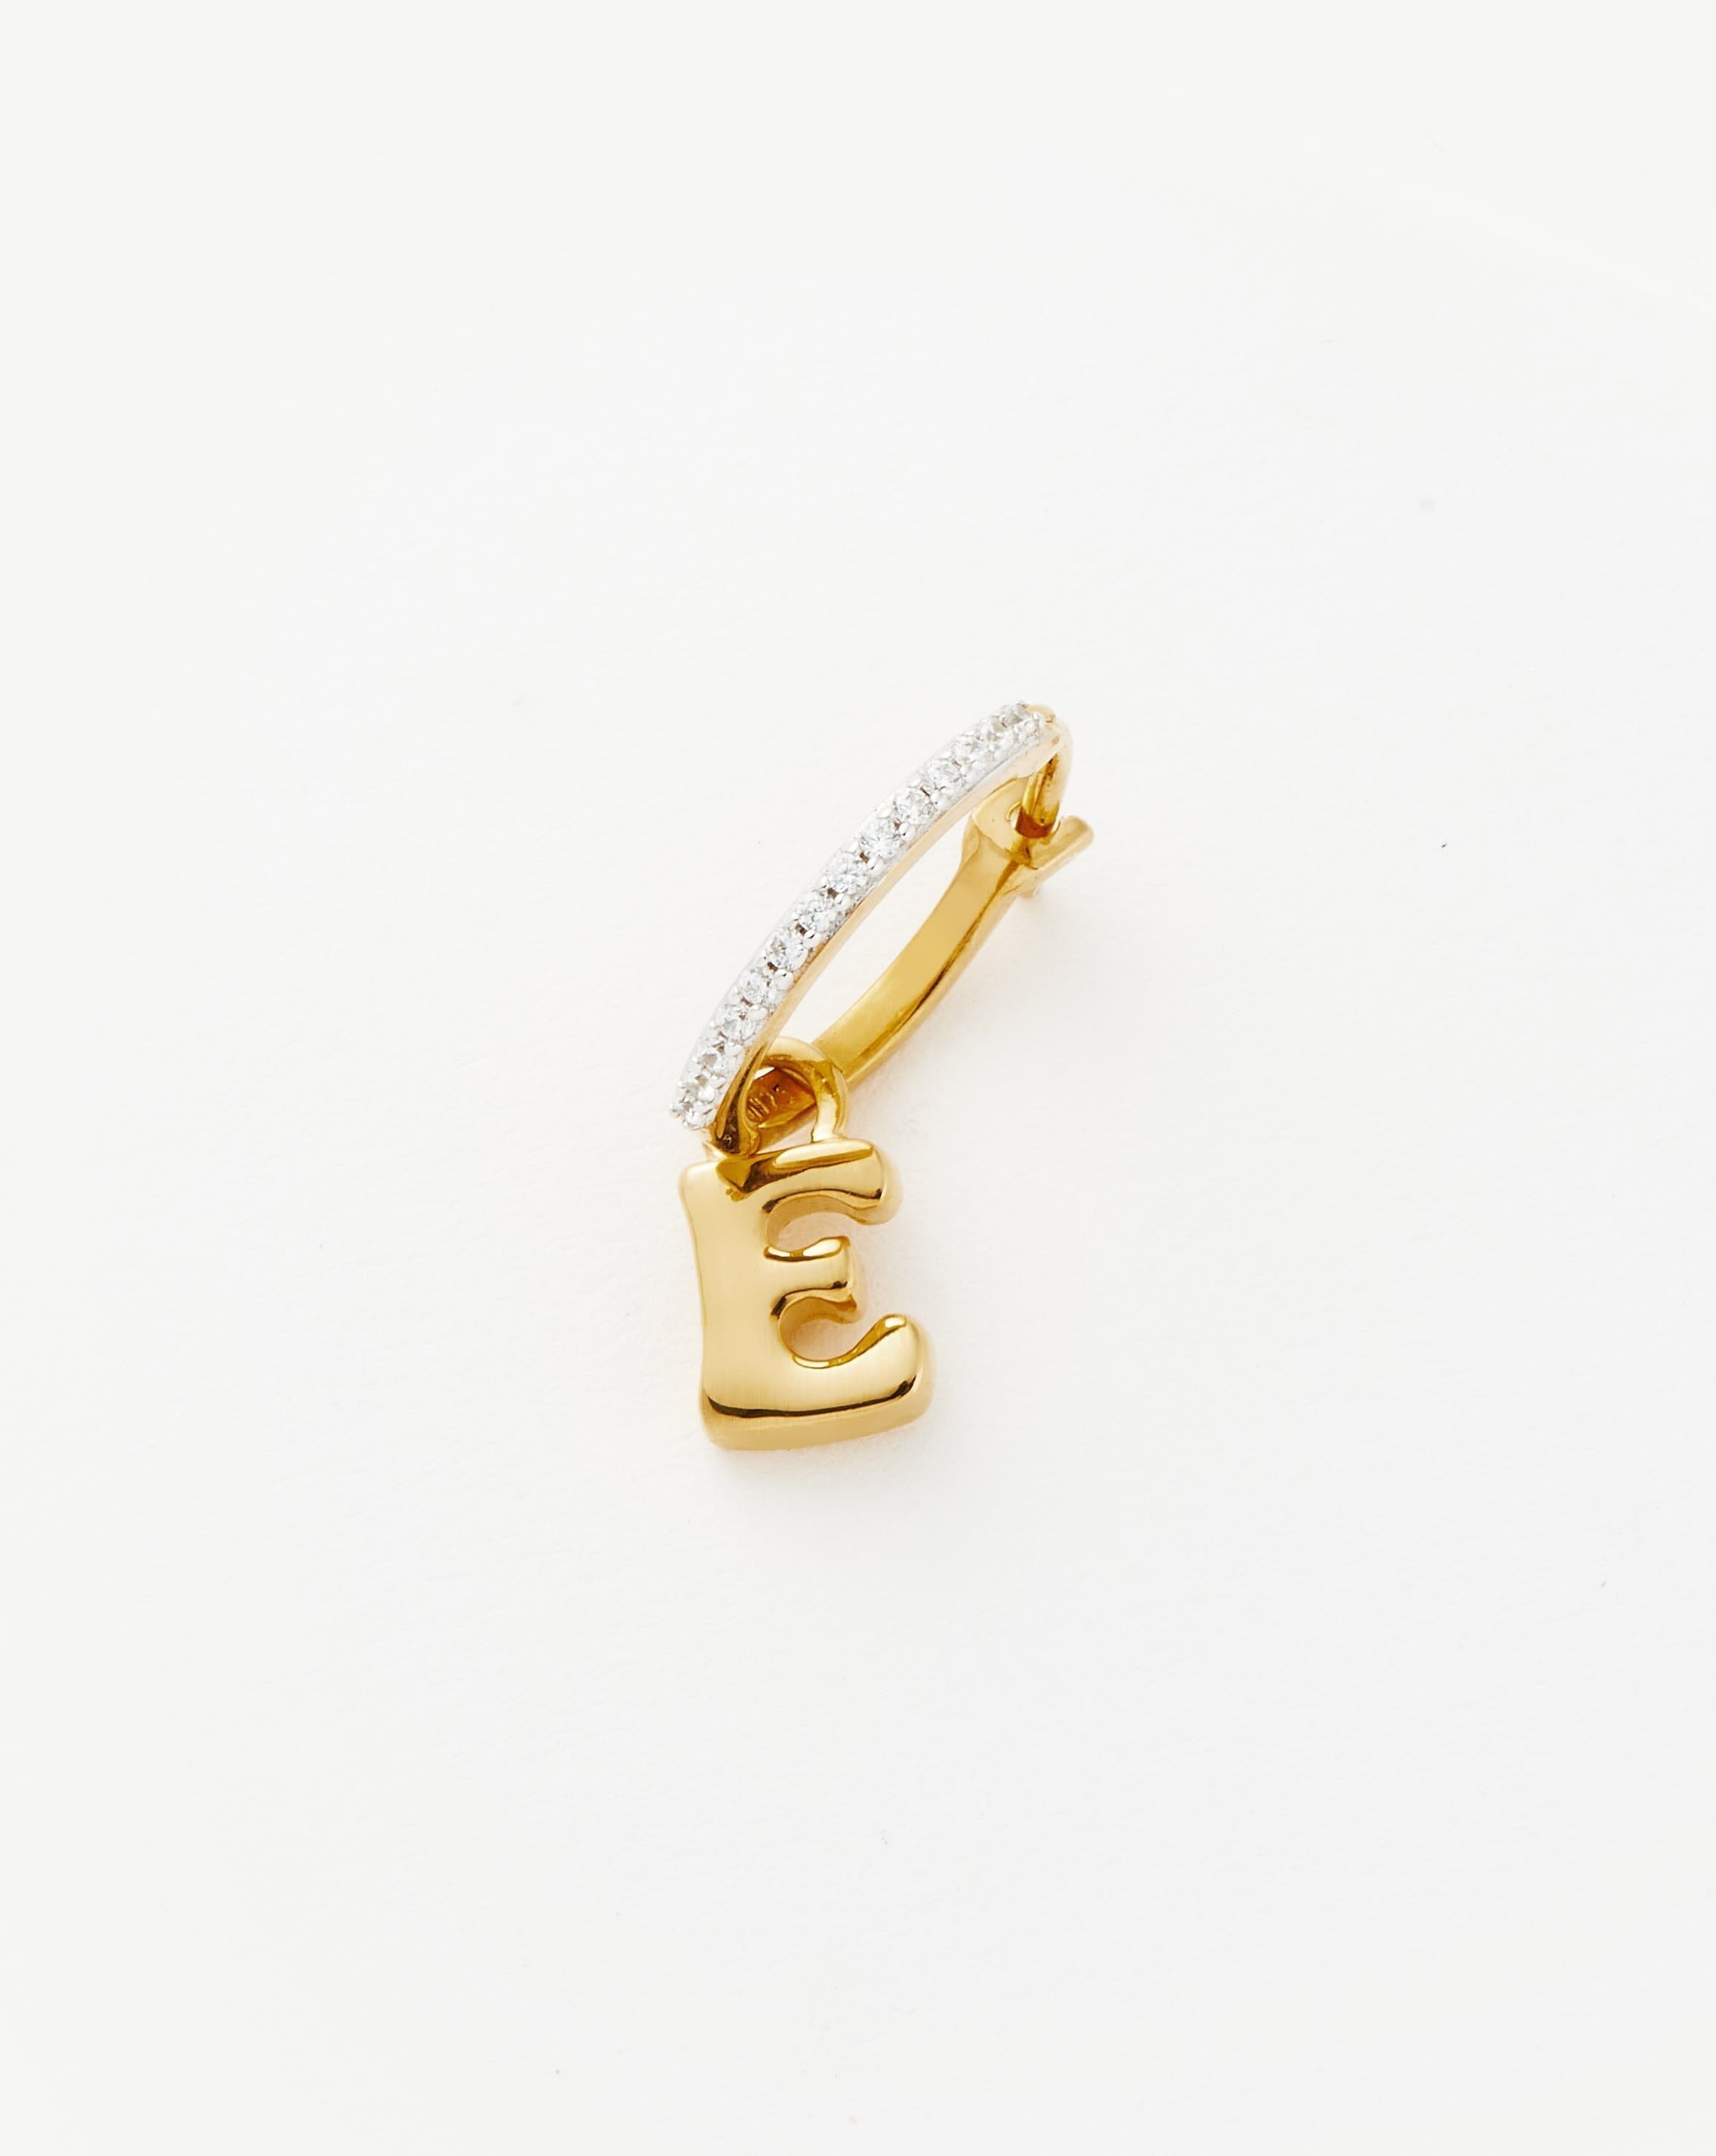 Engraved Initial Bike Lock Charm Bracelet with Diamonds - Gold Vermeil